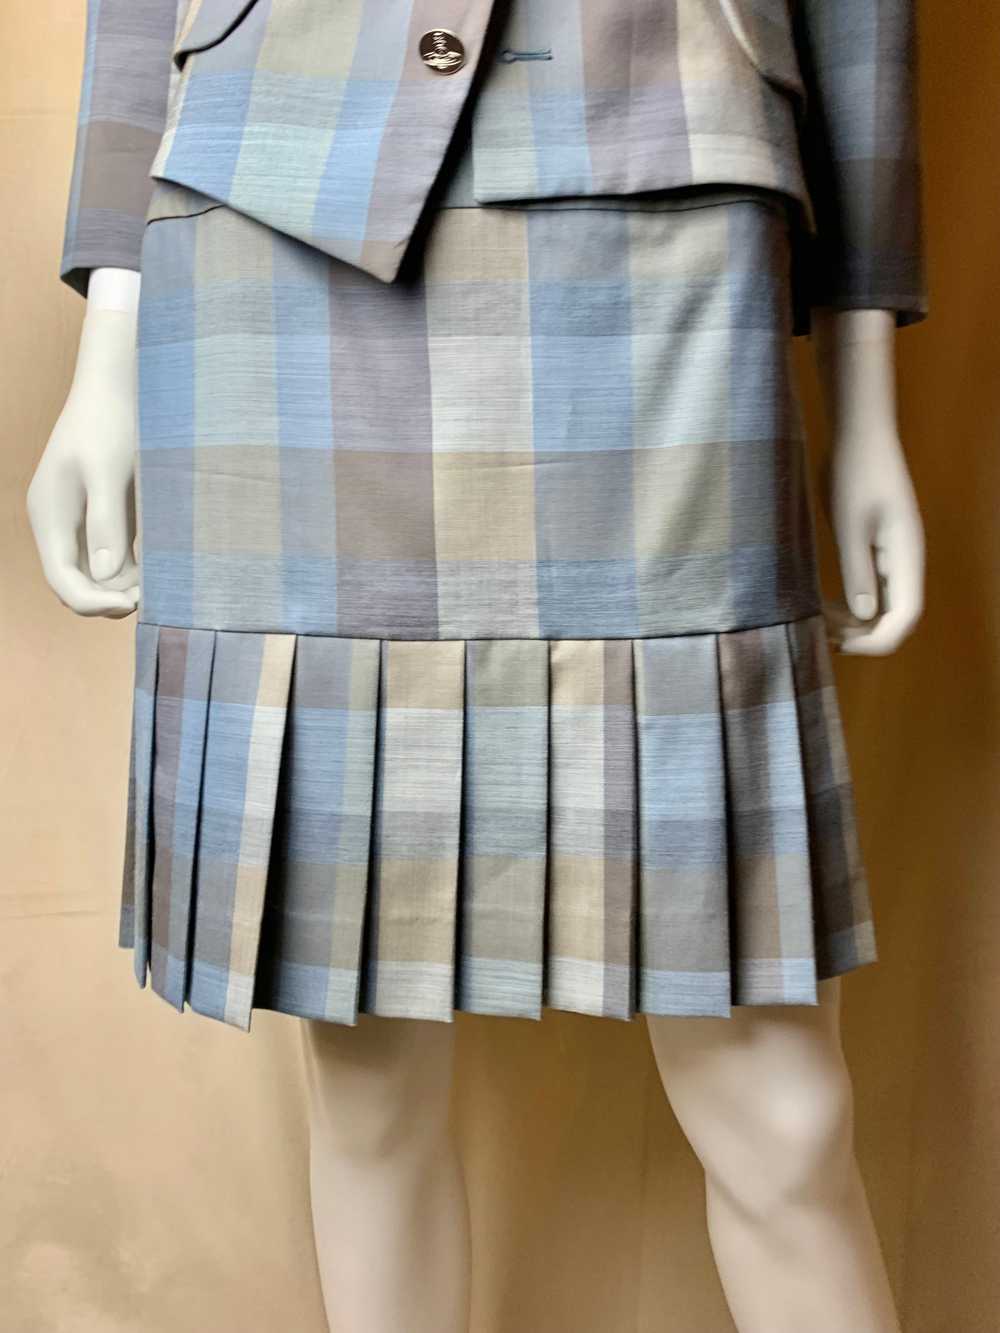 Vivienne Westwood SS 2013 Skirt Suit - image 10